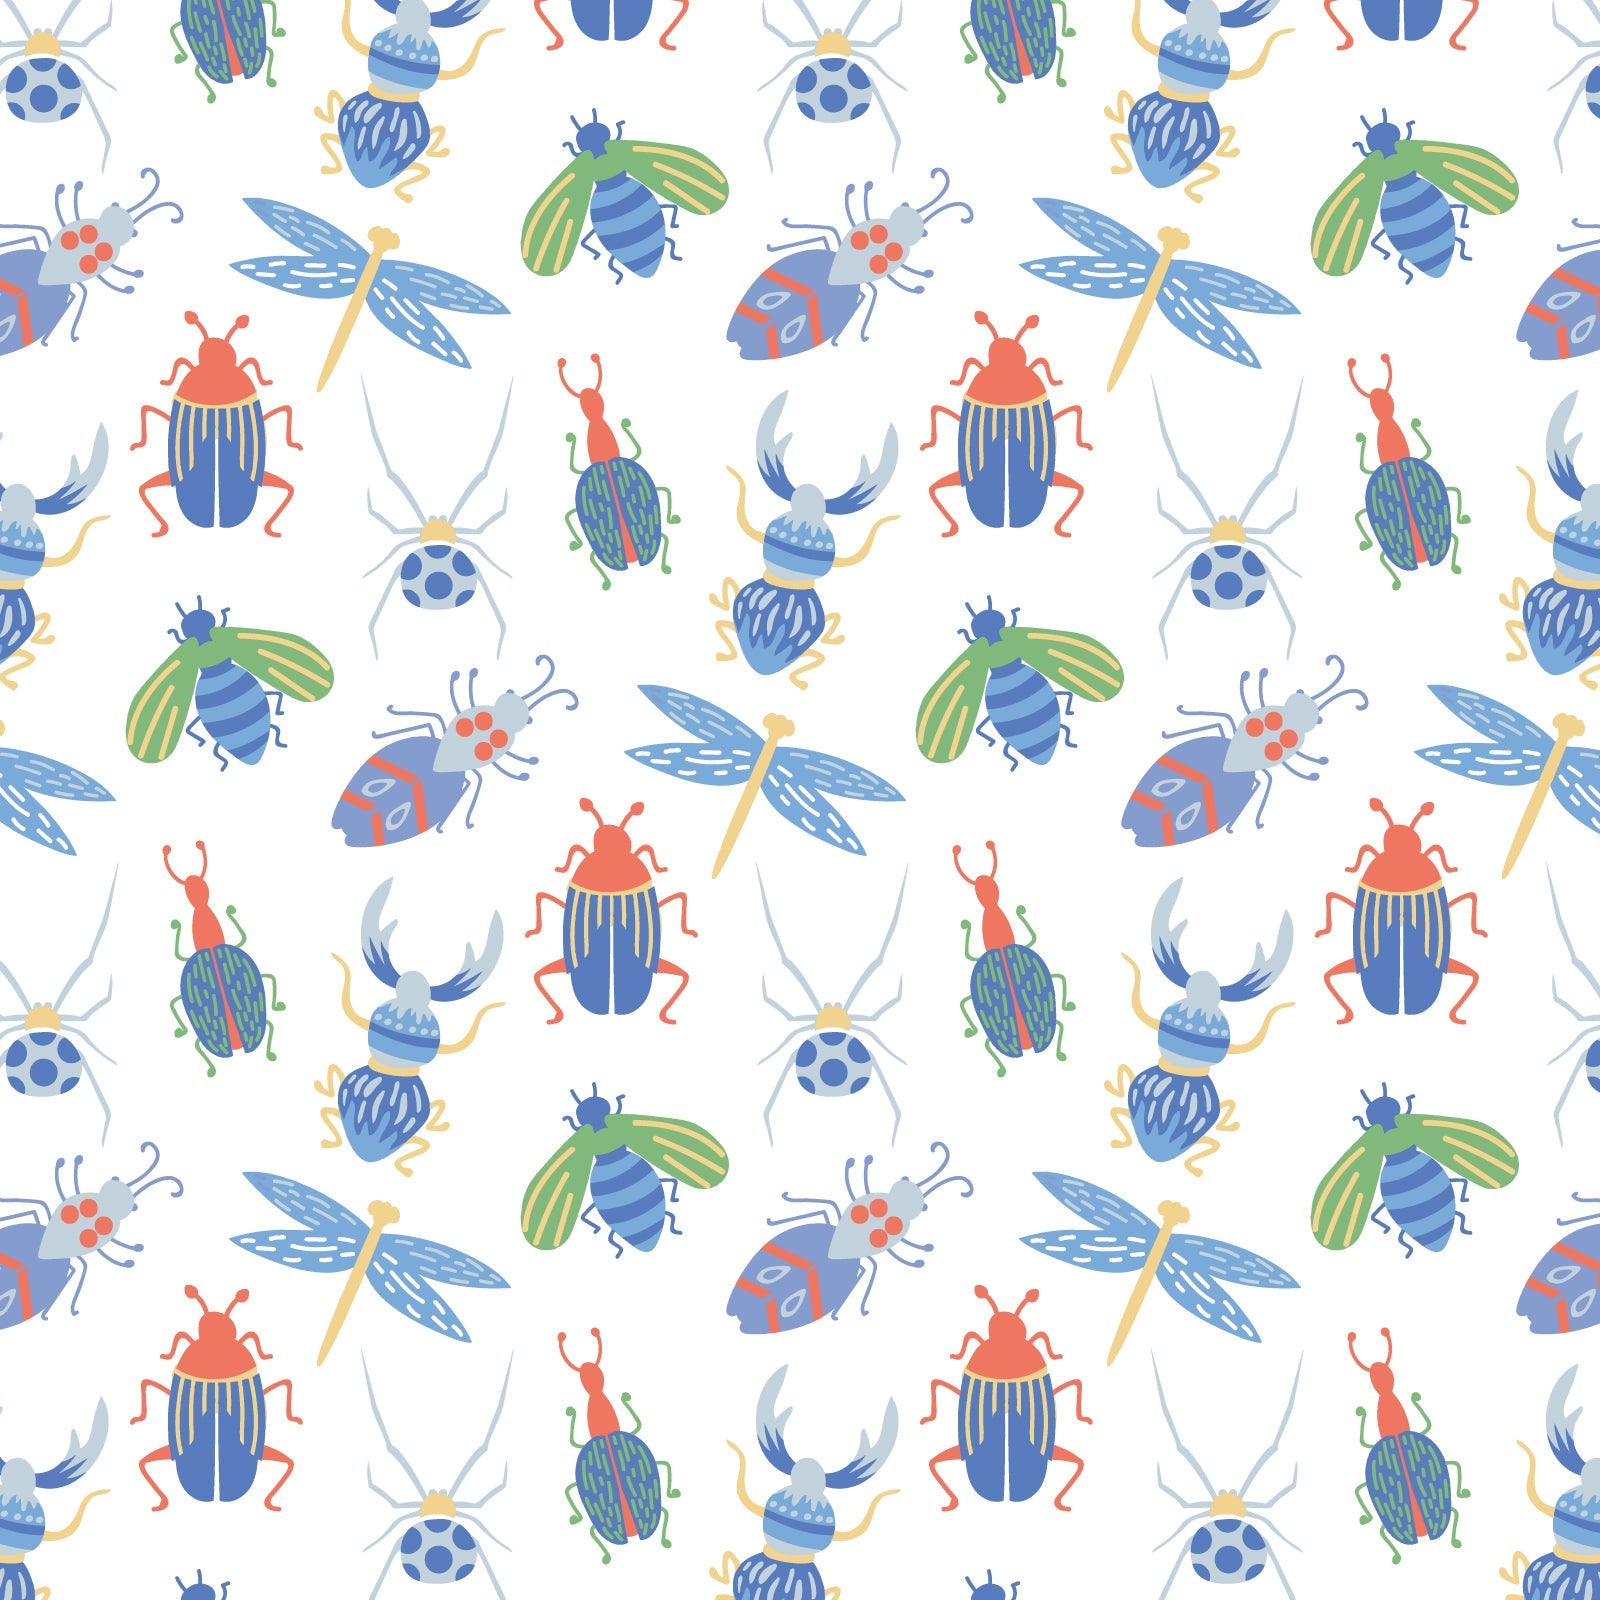 Parker Boys' Pima Cotton Zipper Pajama - Busy Bugs